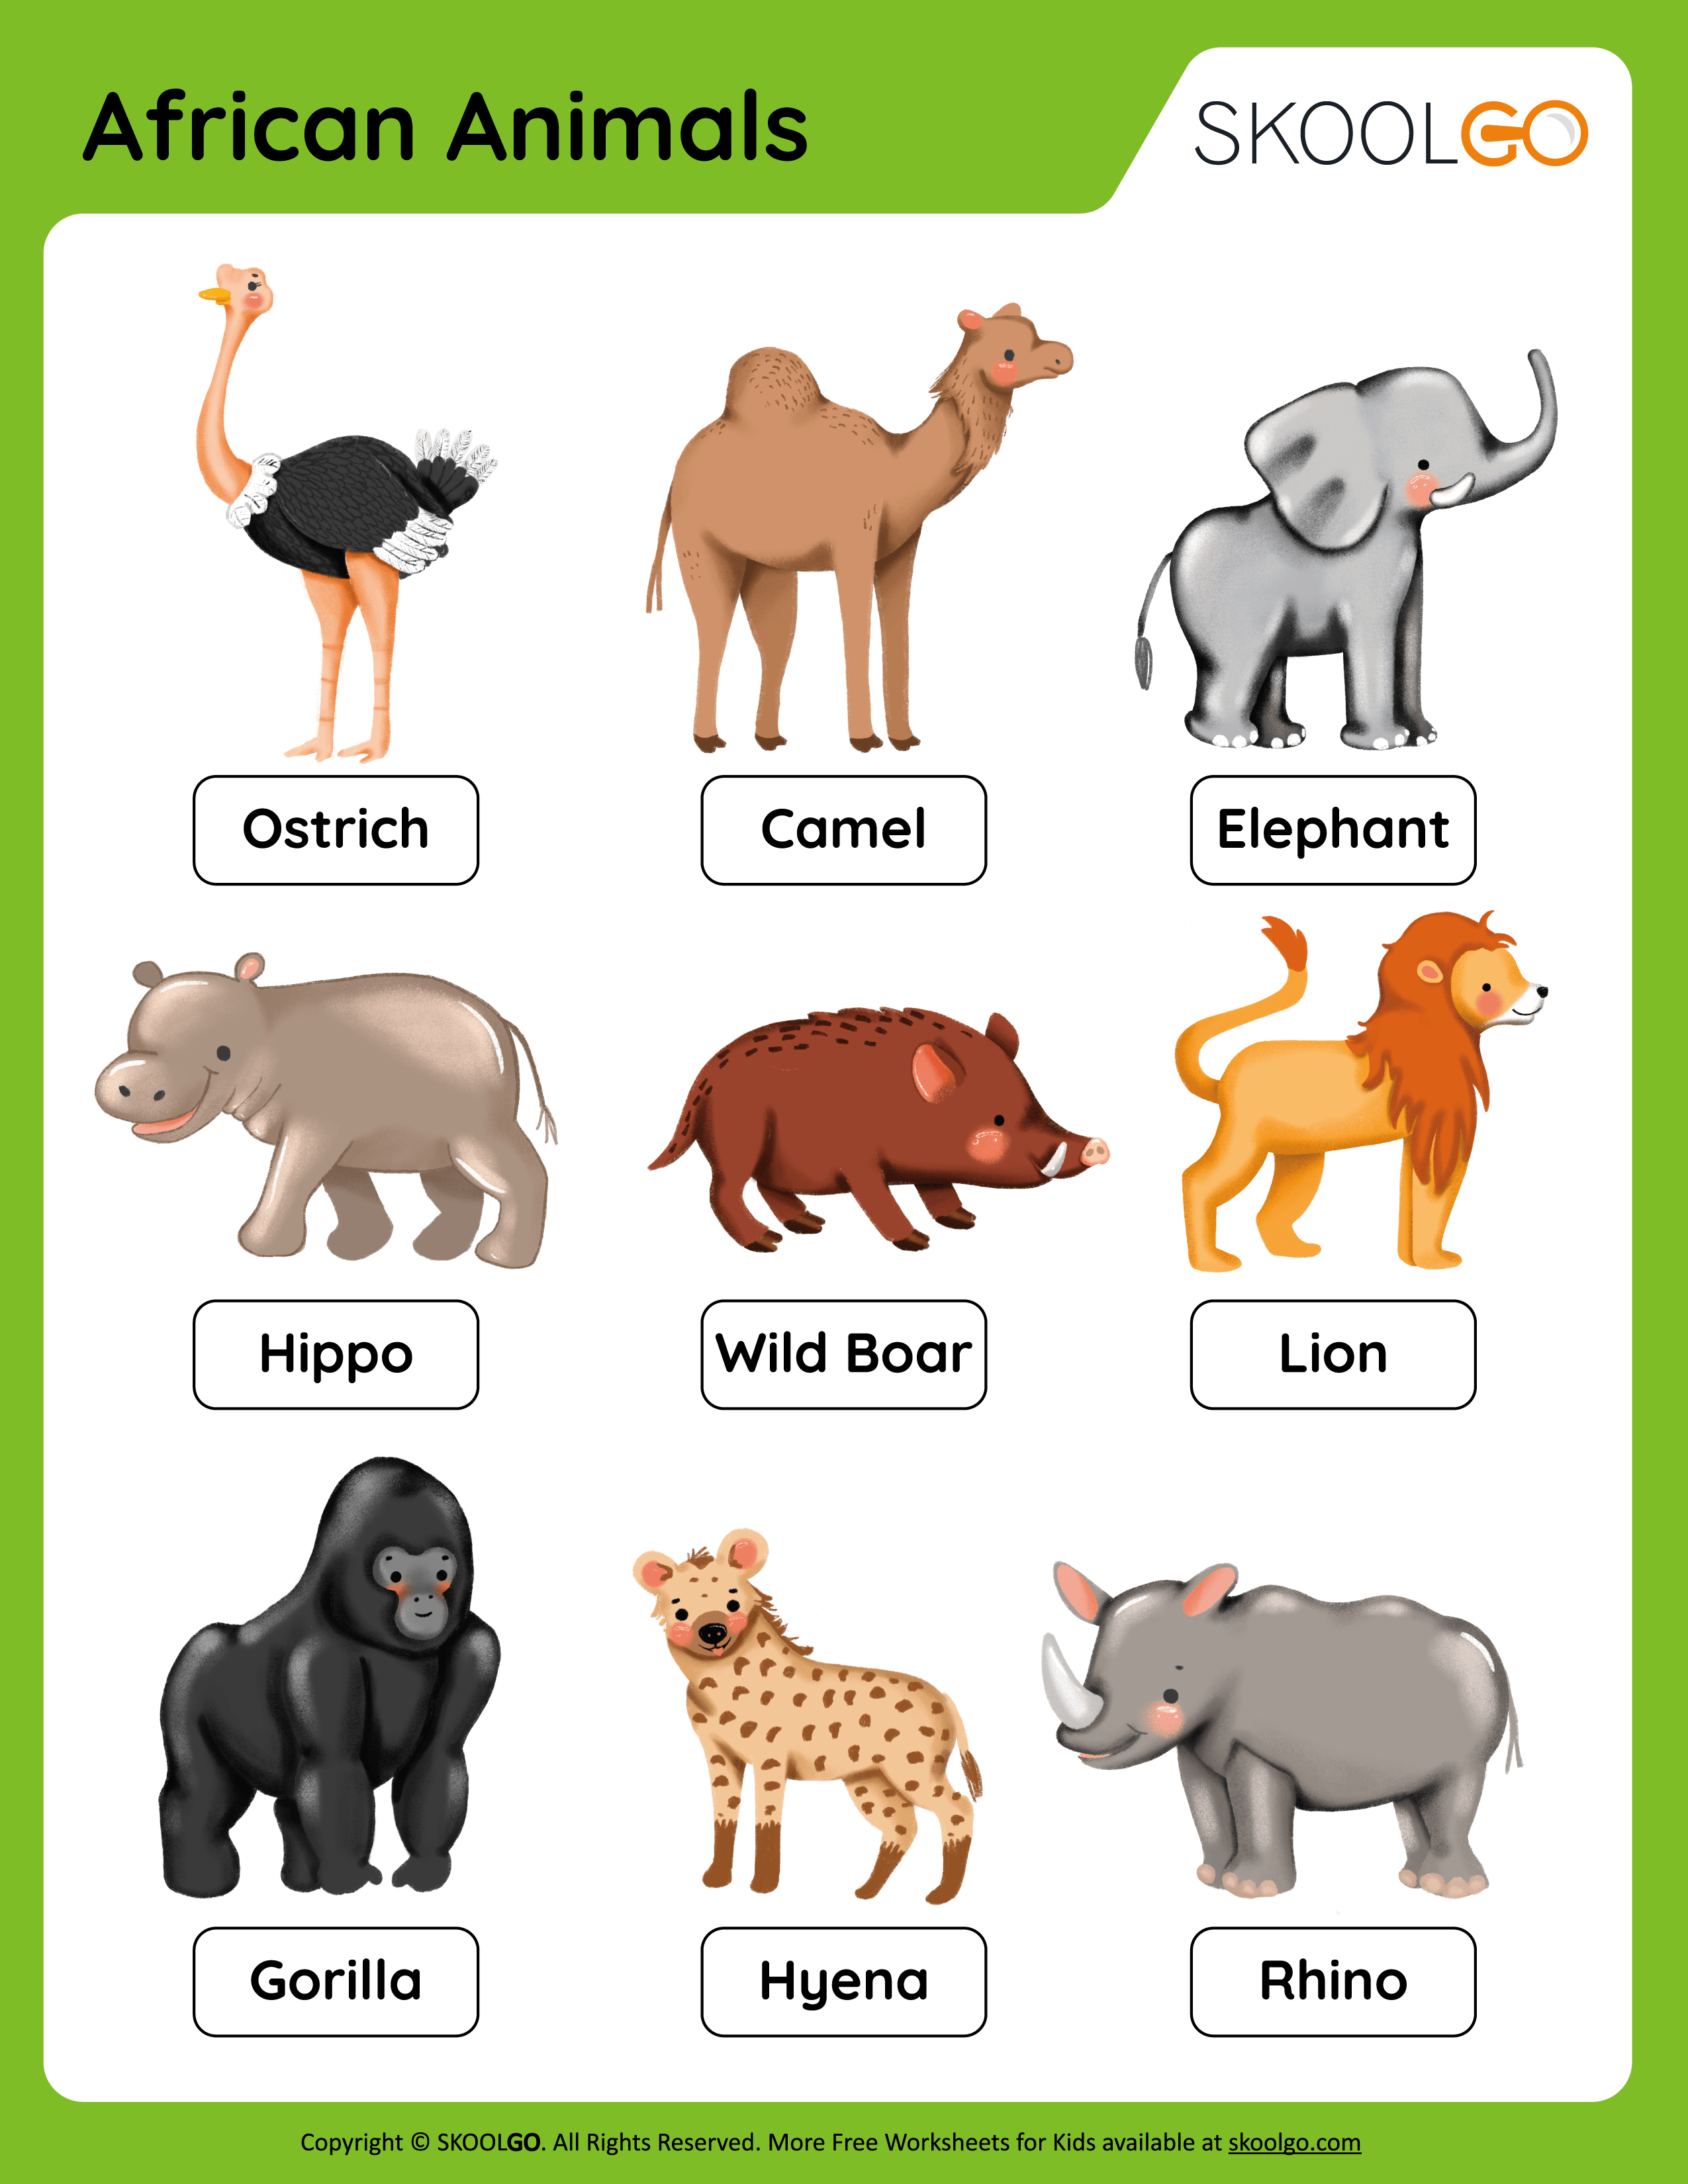 African Animals - Free Worksheet for Kids